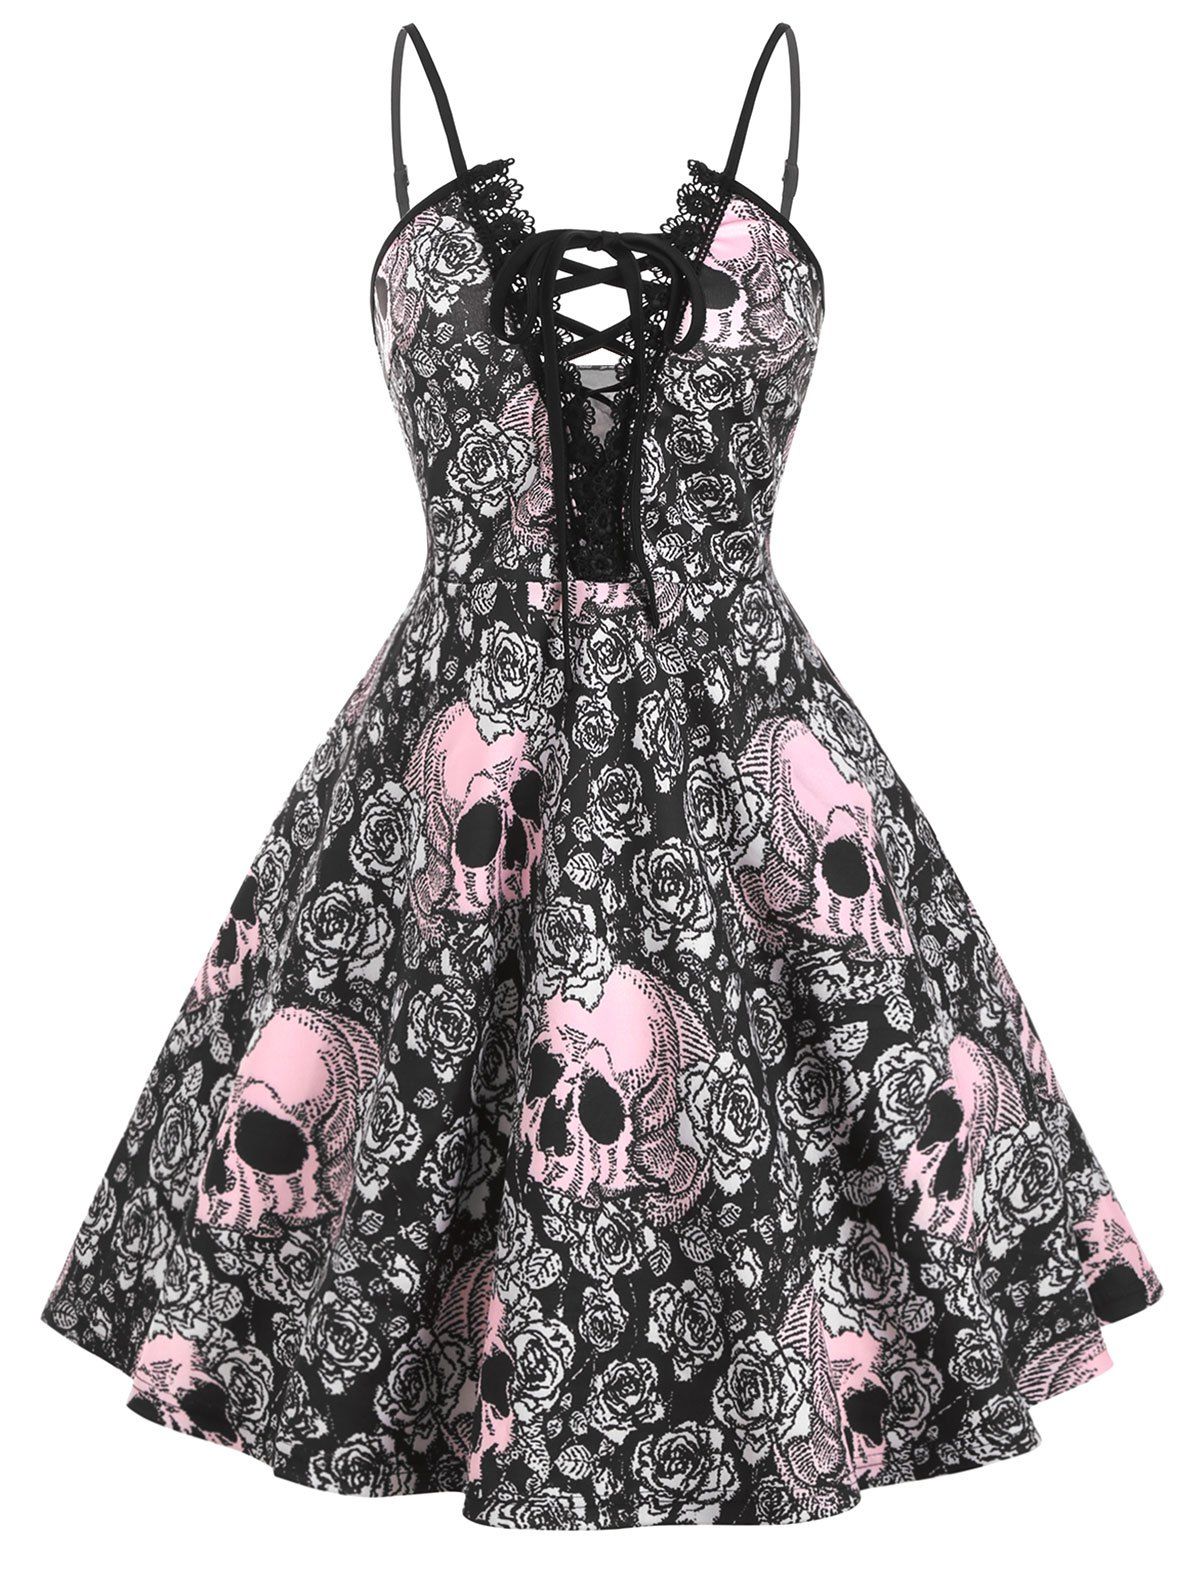 Halloween Skull Print Lace Up Lace Trim Plus Size Dress - BLACK 1X